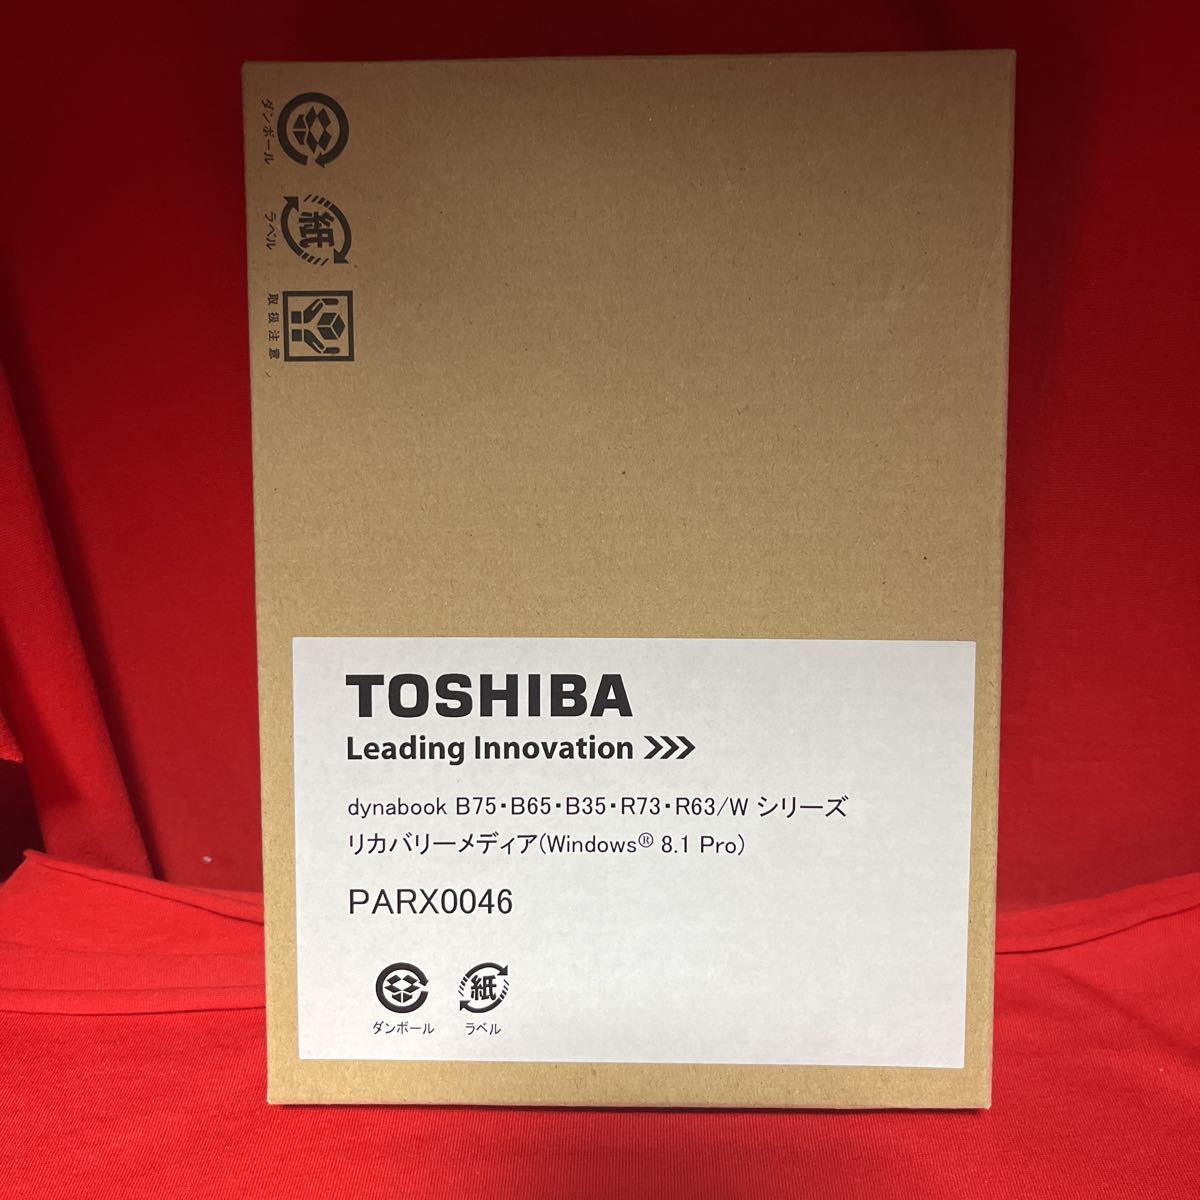 TOSHIBA Dynabook B75*B65*B35*R73*R63/W series recovery - media (windows 8.1 Pro) PARX0046